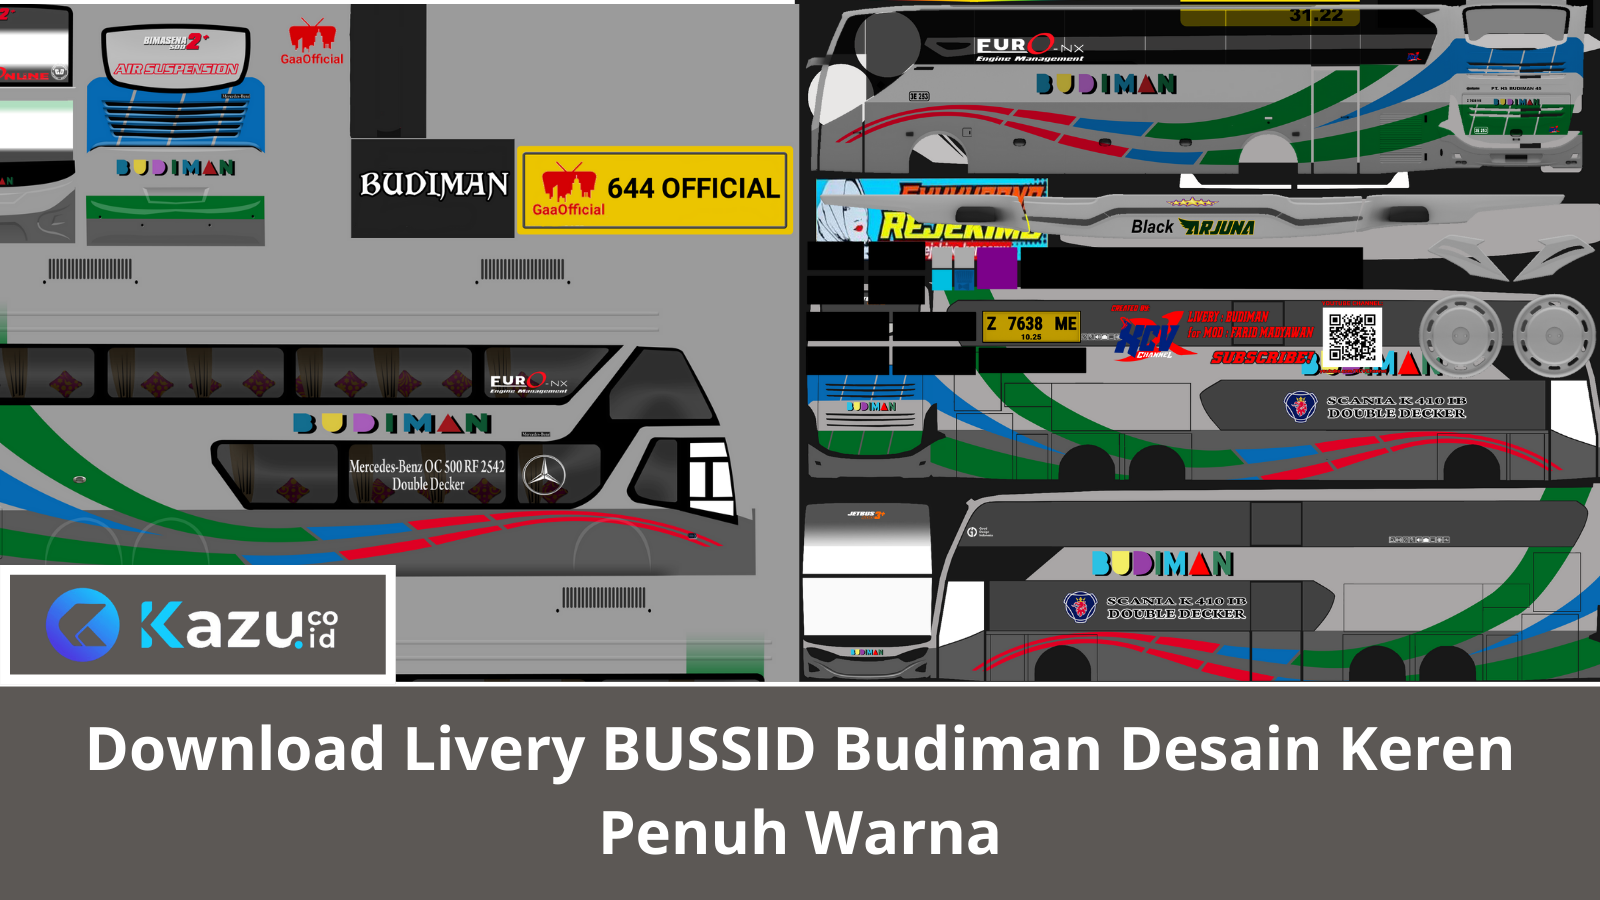 Download Livery BUSSID Budiman Desain Keren Penuh Warna